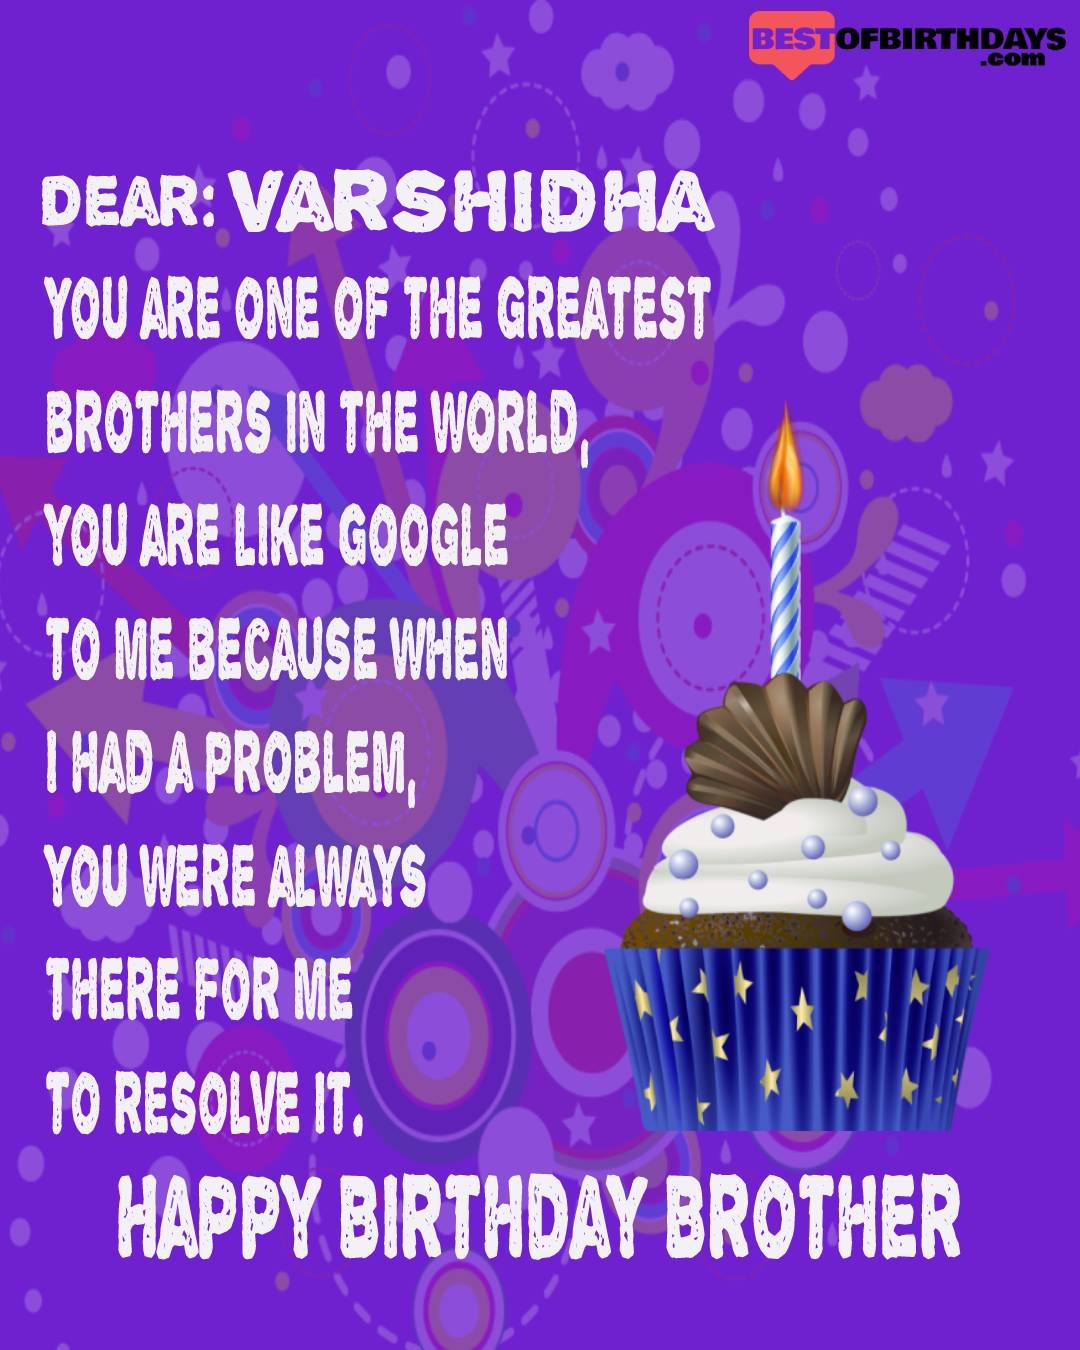 Happy birthday varshidha bhai brother bro